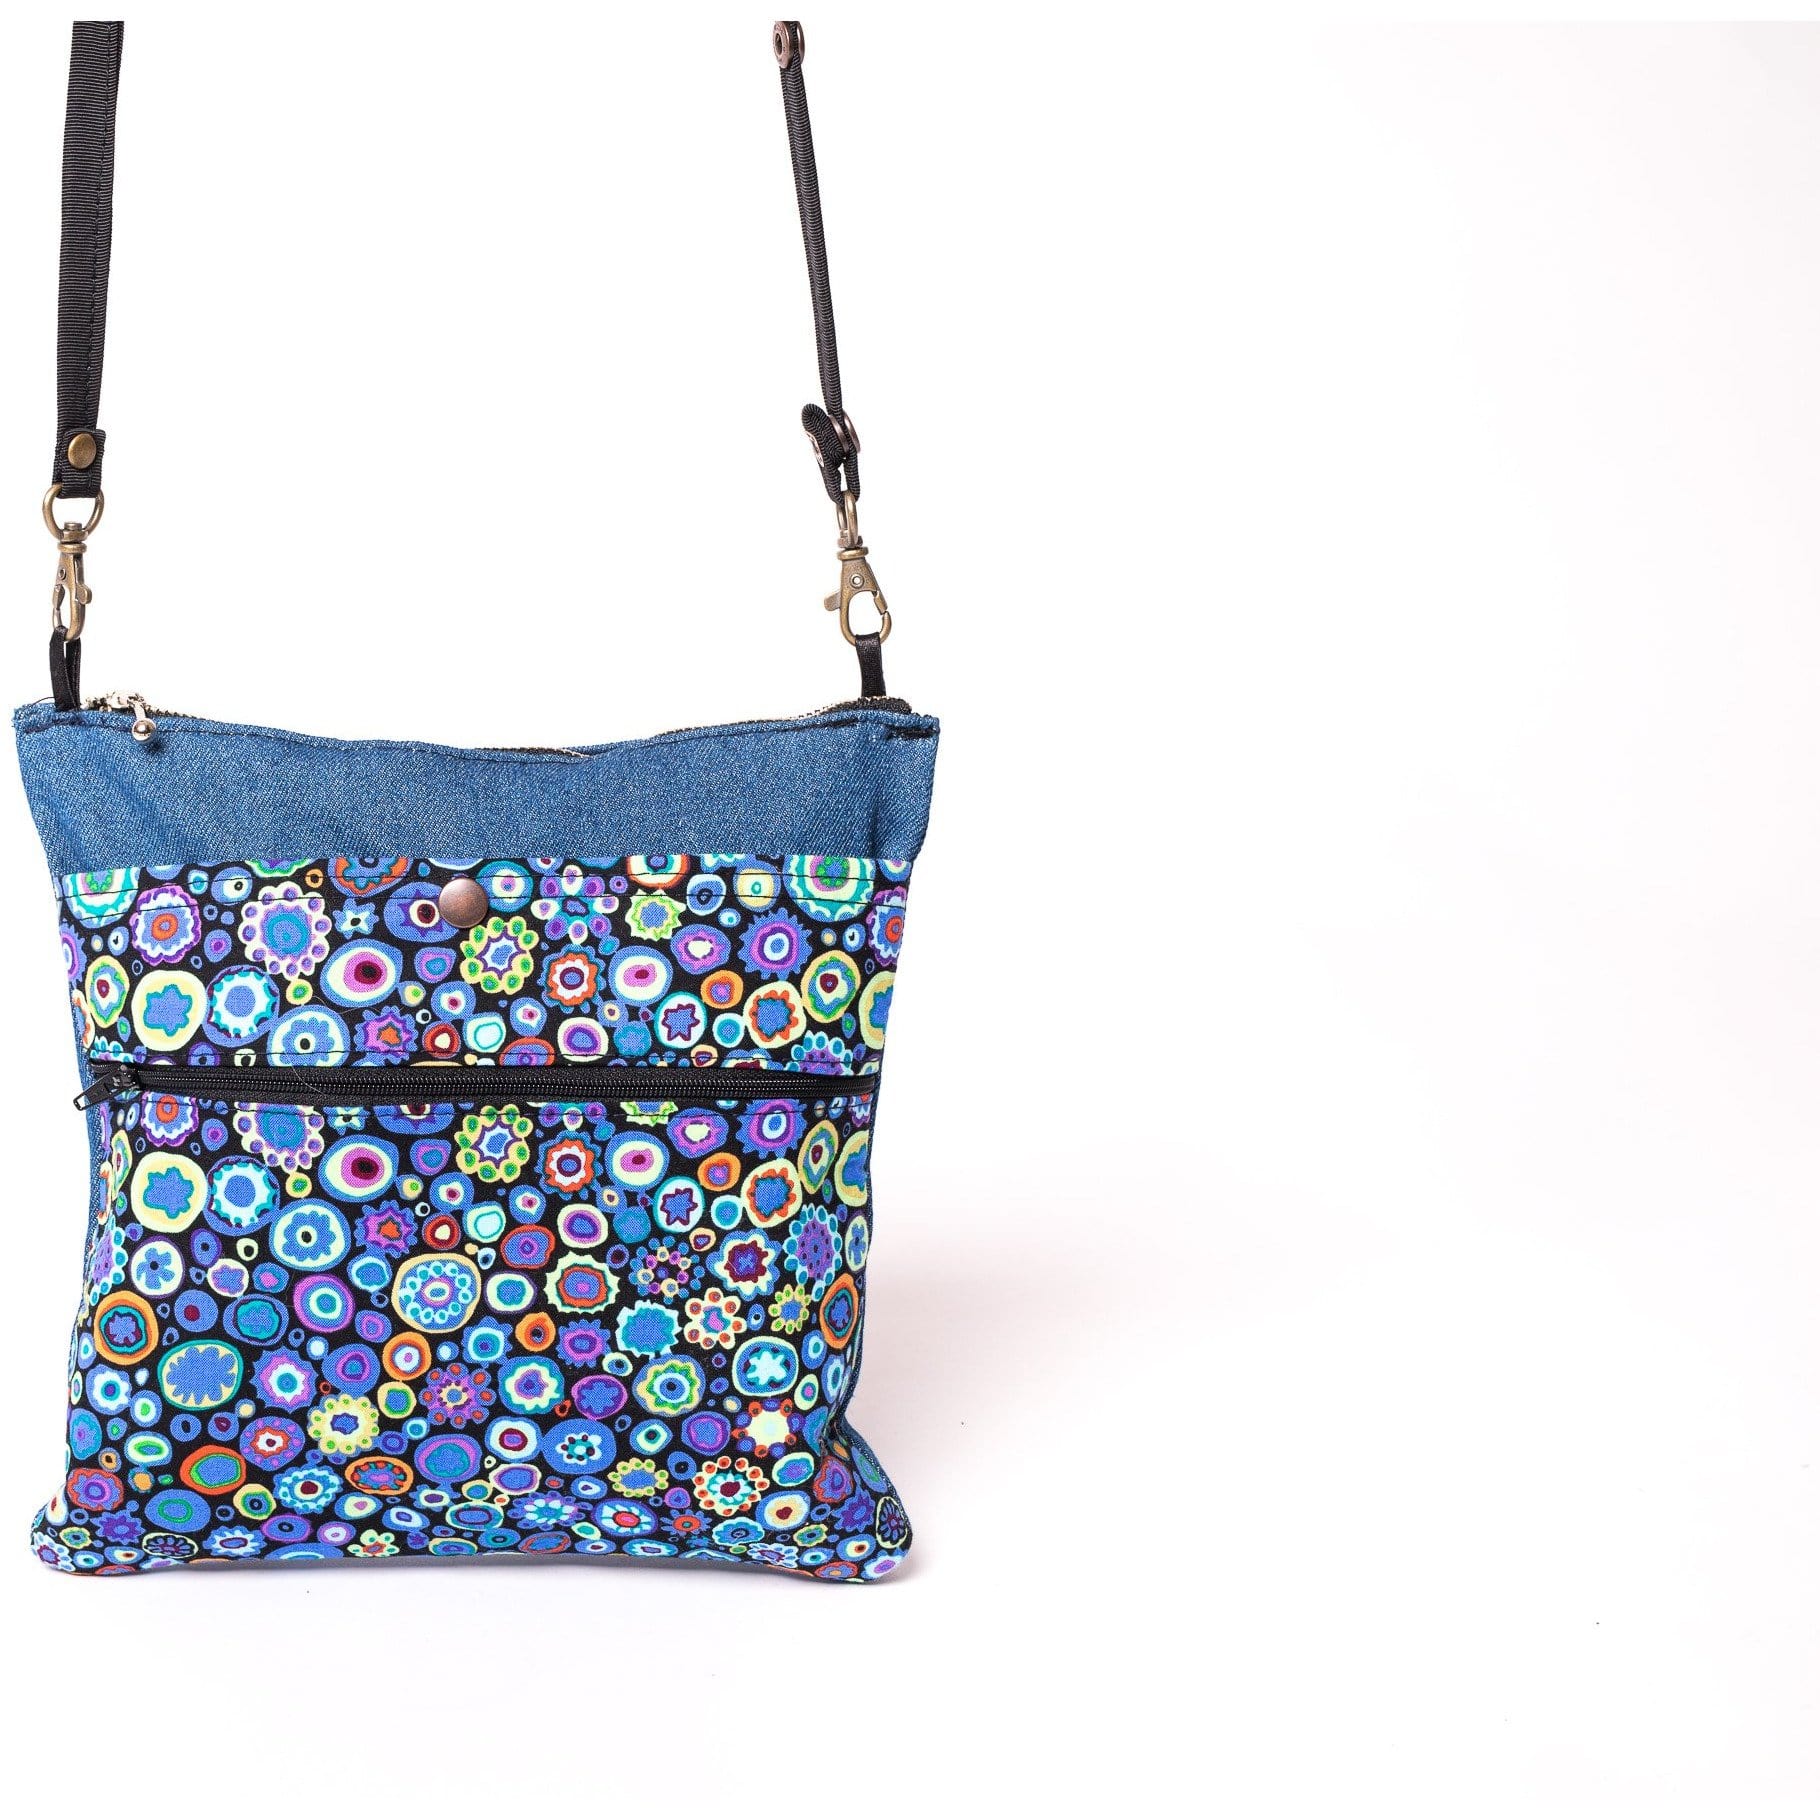 Up-styled denim bag- Small Bucket bag- Blue printed contemporary design pocket- zipper for closure